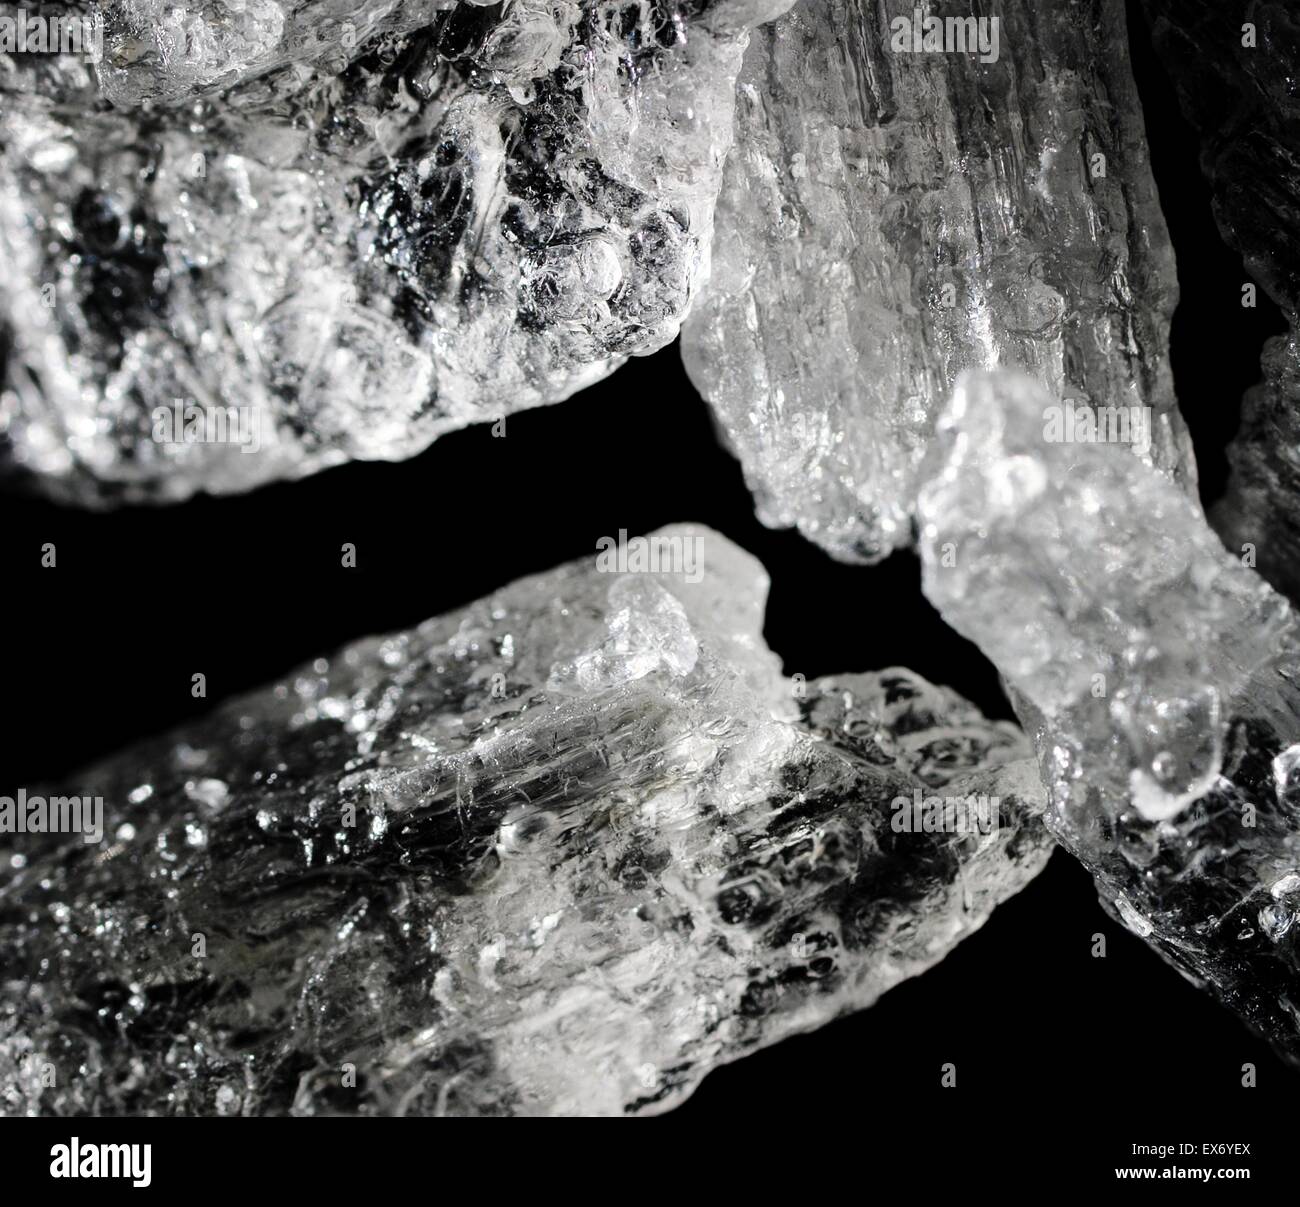 Kristall methylamphetamin -Fotos und -Bildmaterial in hoher Auflösung ...